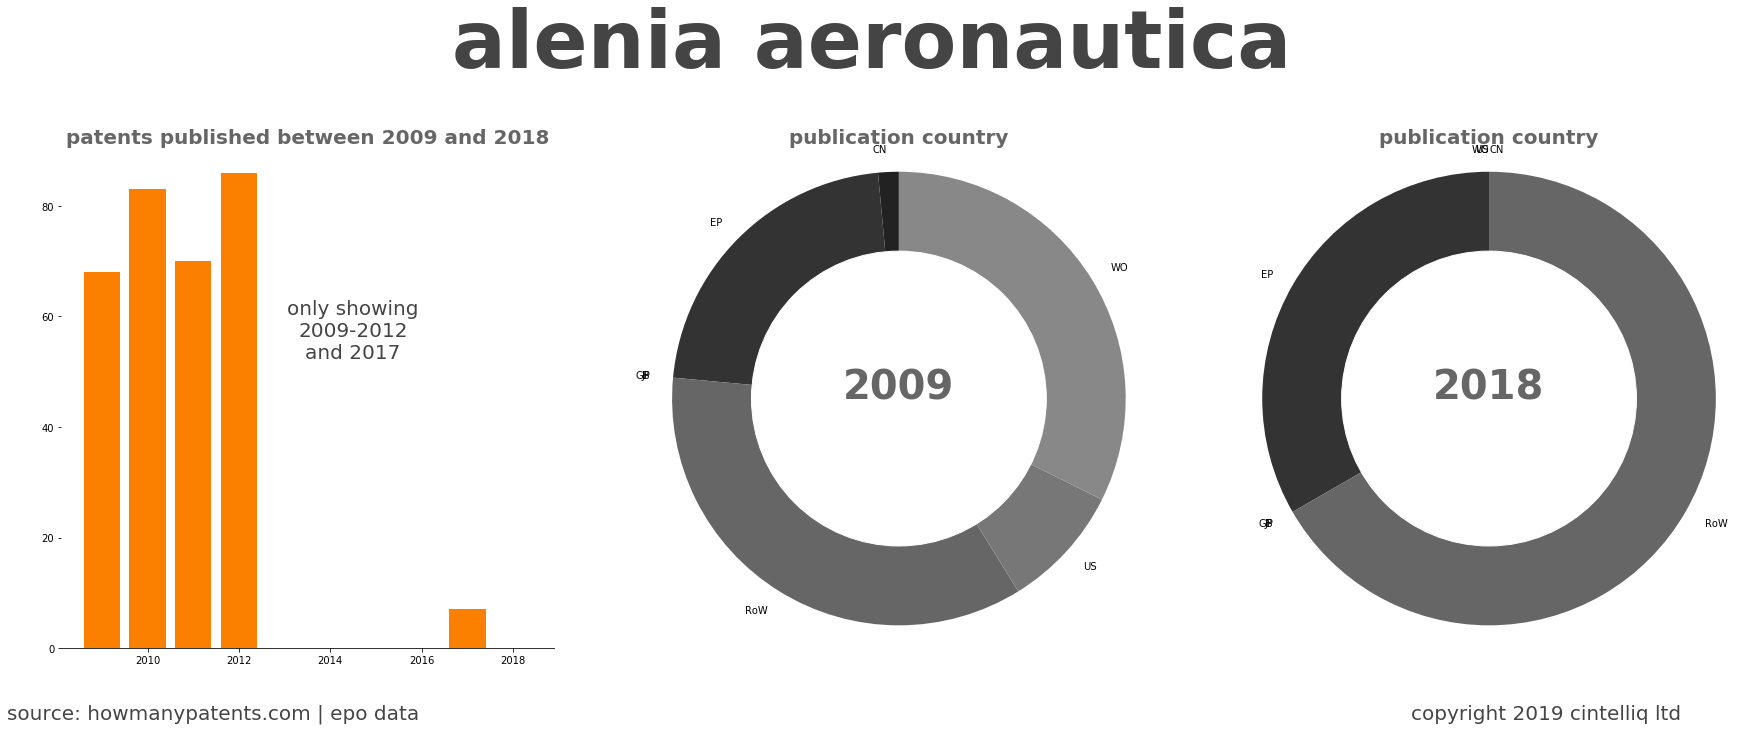 summary of patents for Alenia Aeronautica